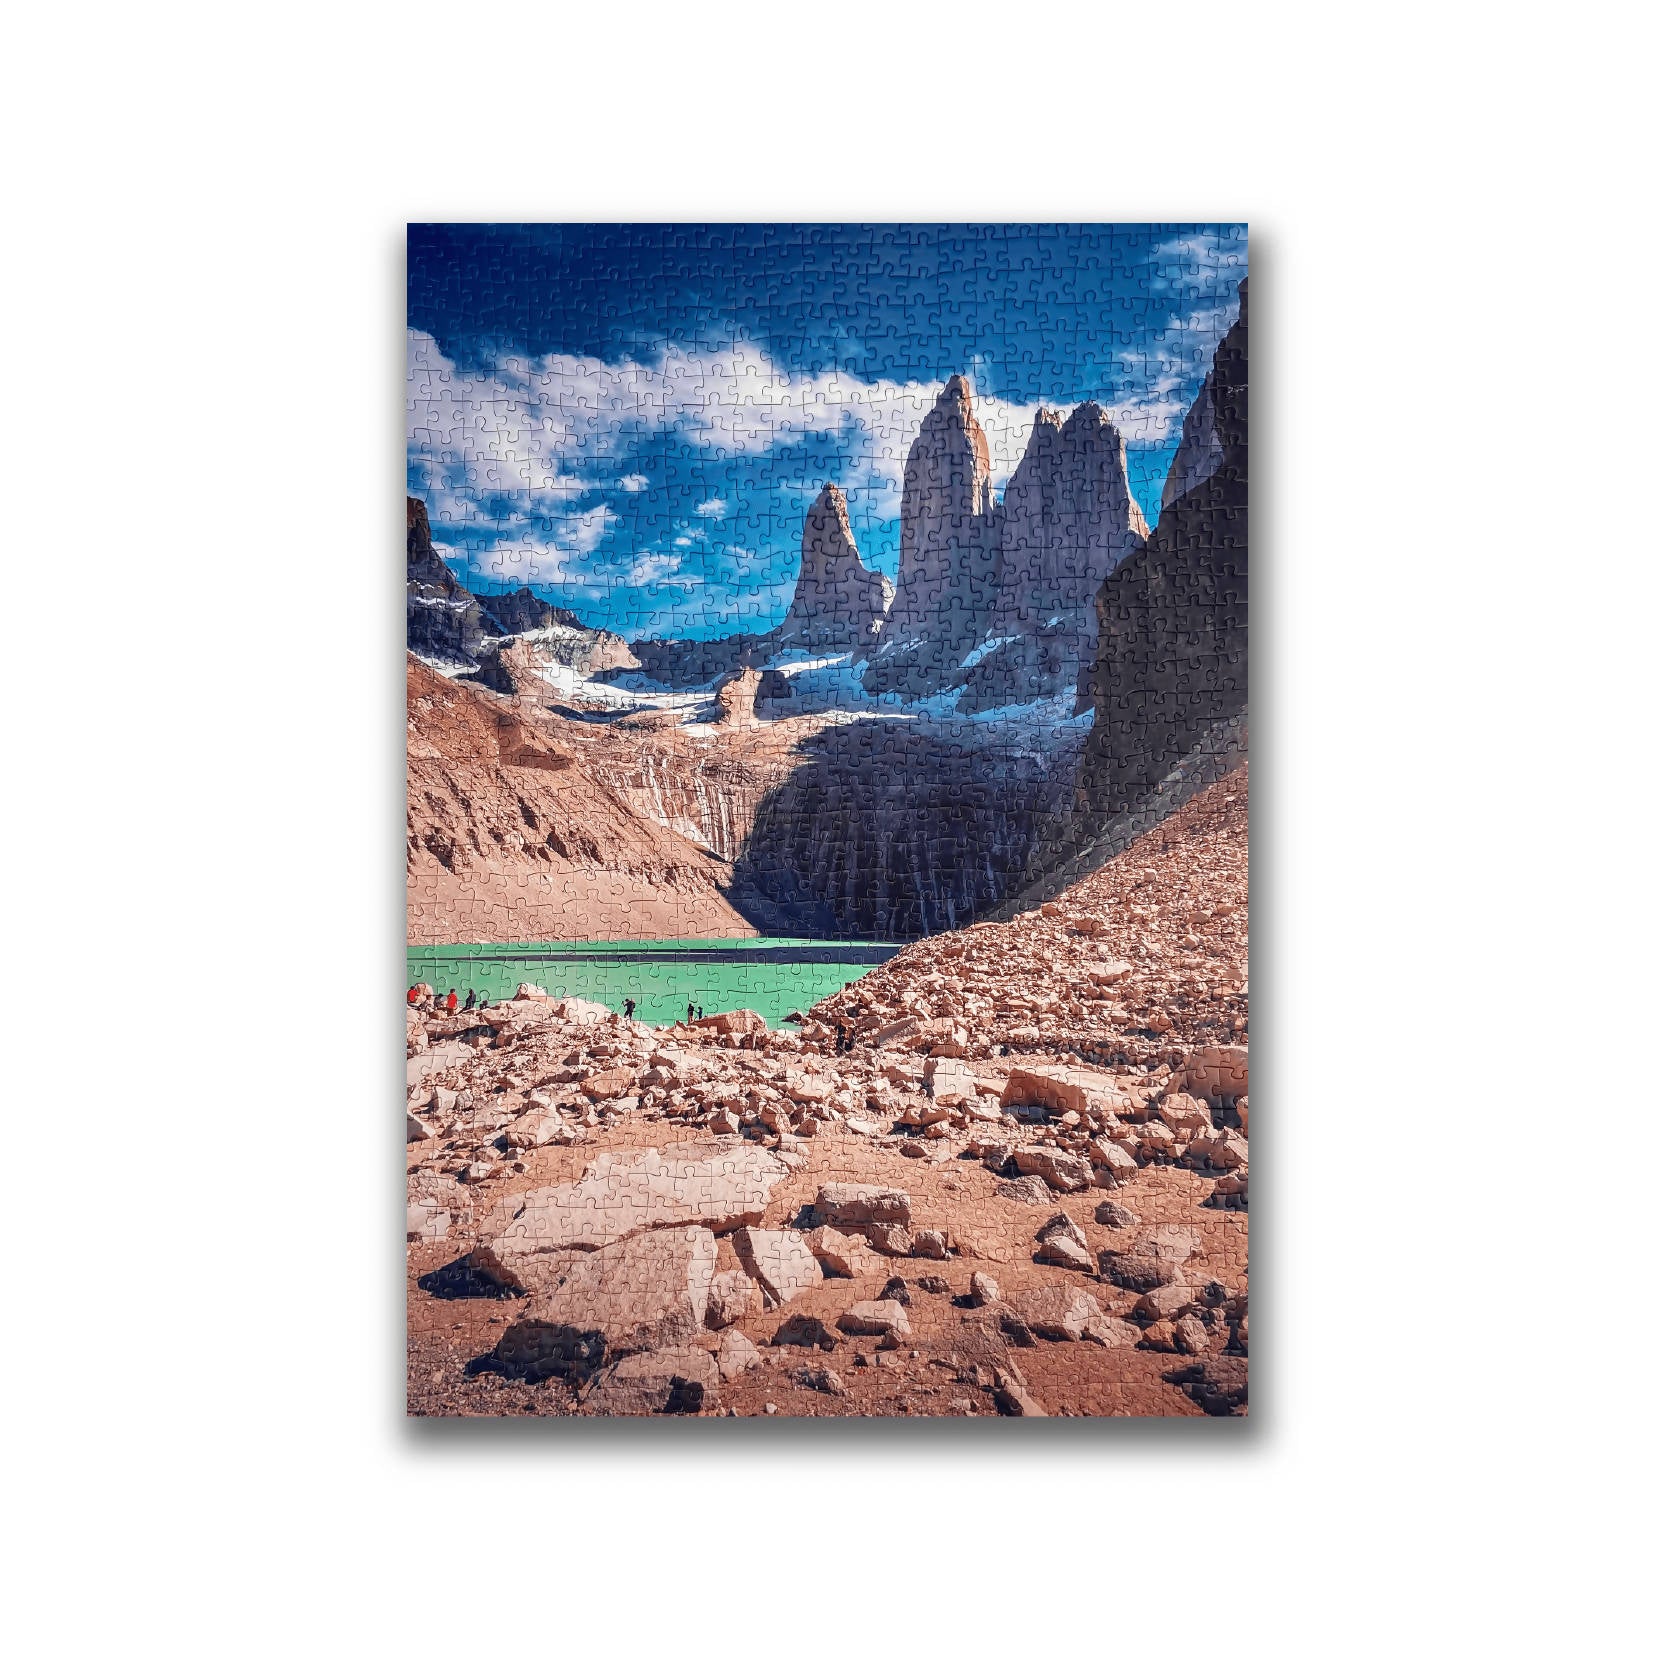 Puzzle Parque Nacional Torres del Paine 1000 Piezas